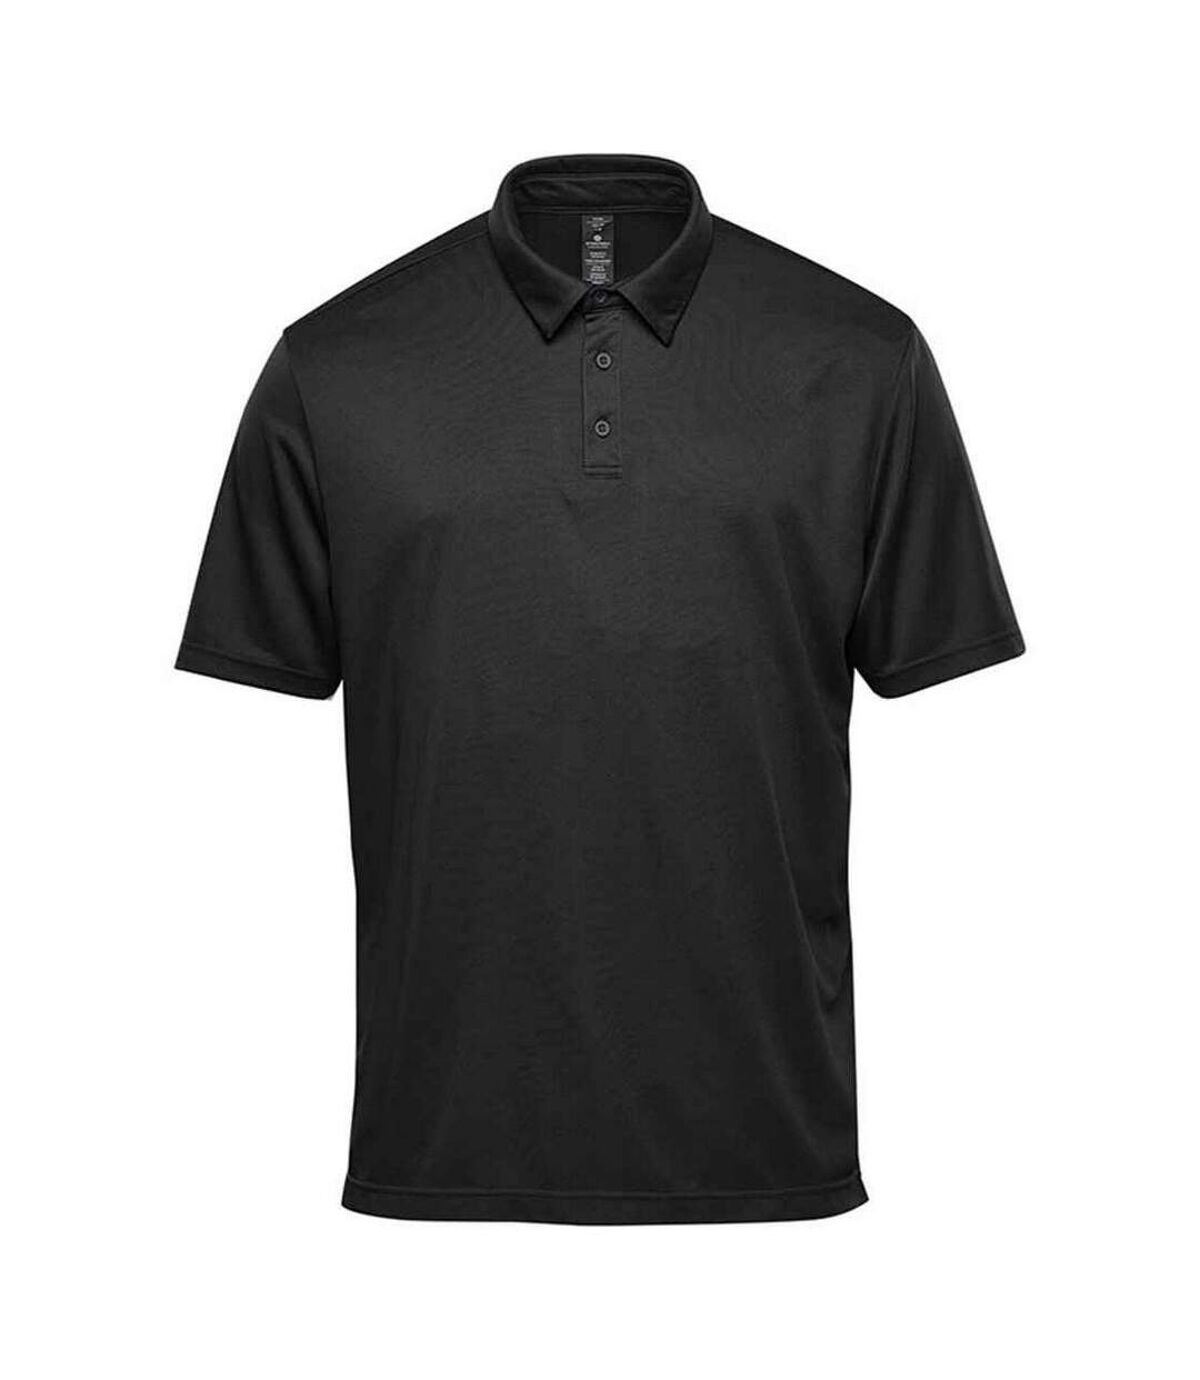 Stormtech Mens Treeline Performance Polo Shirt (Black)